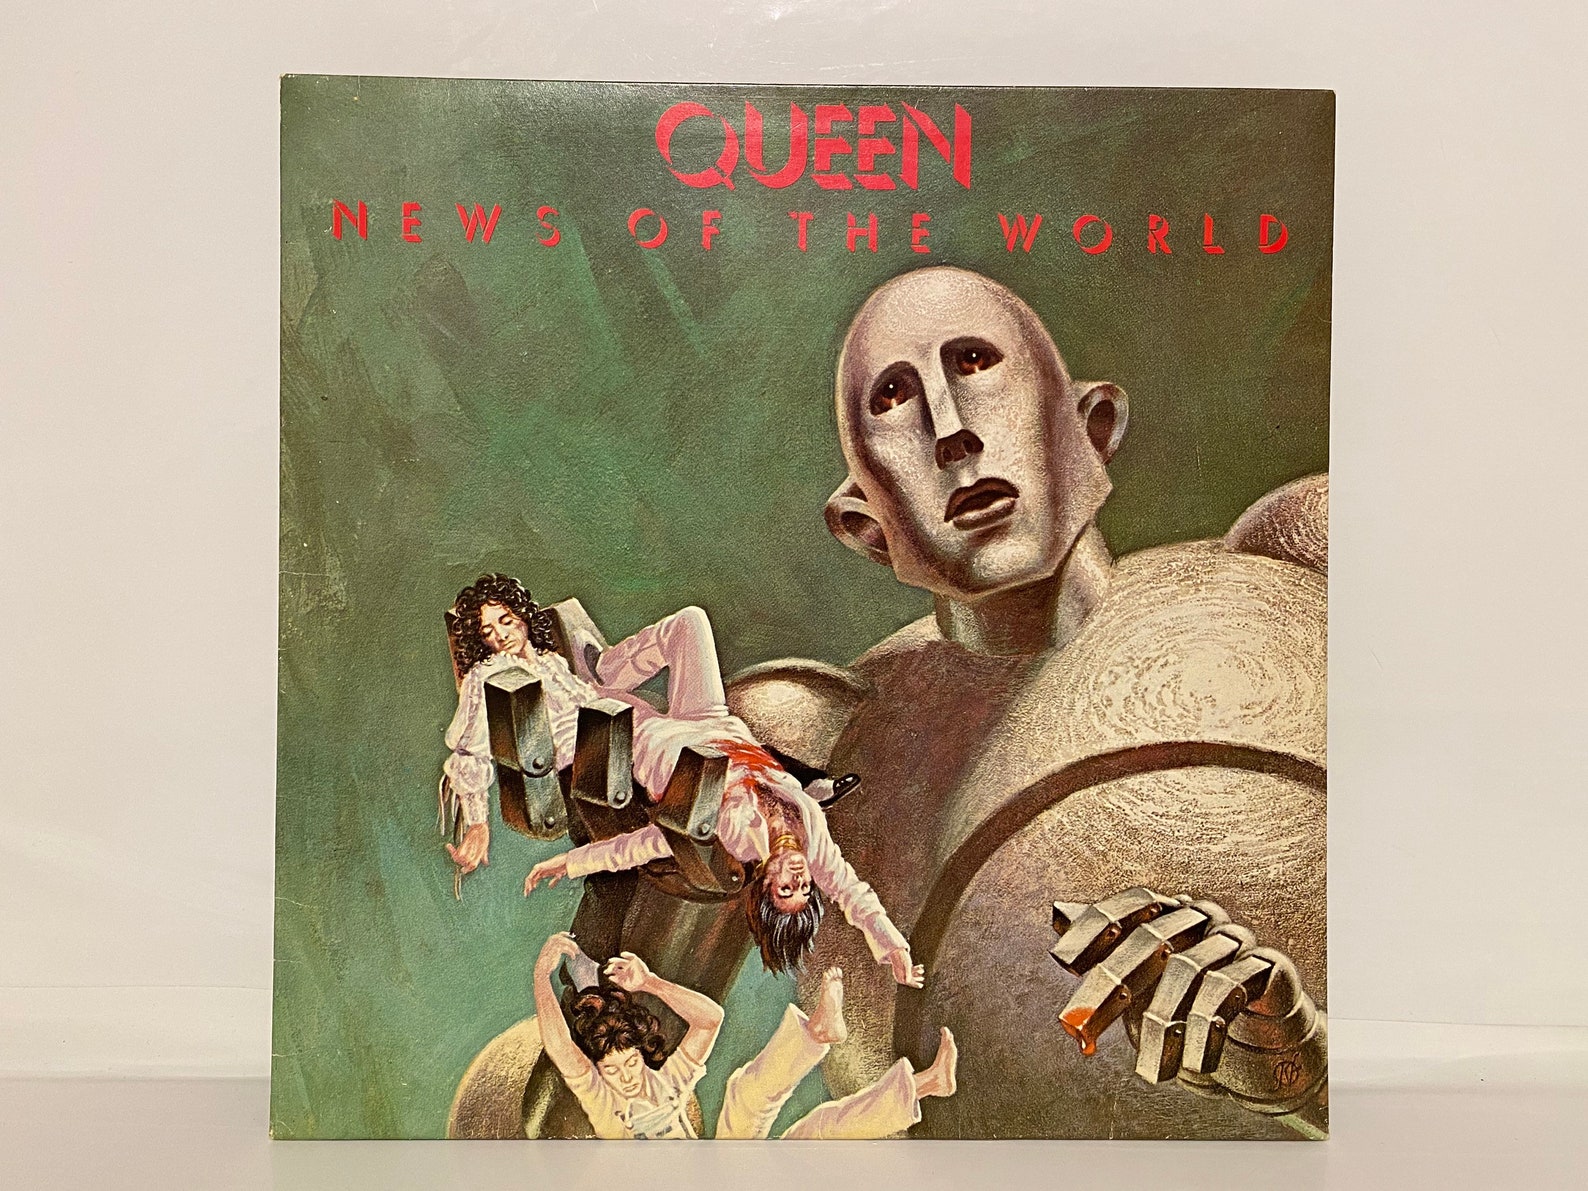 Queen Album News Of The World Genre Rock Vinyl LP 12 Record | Etsy